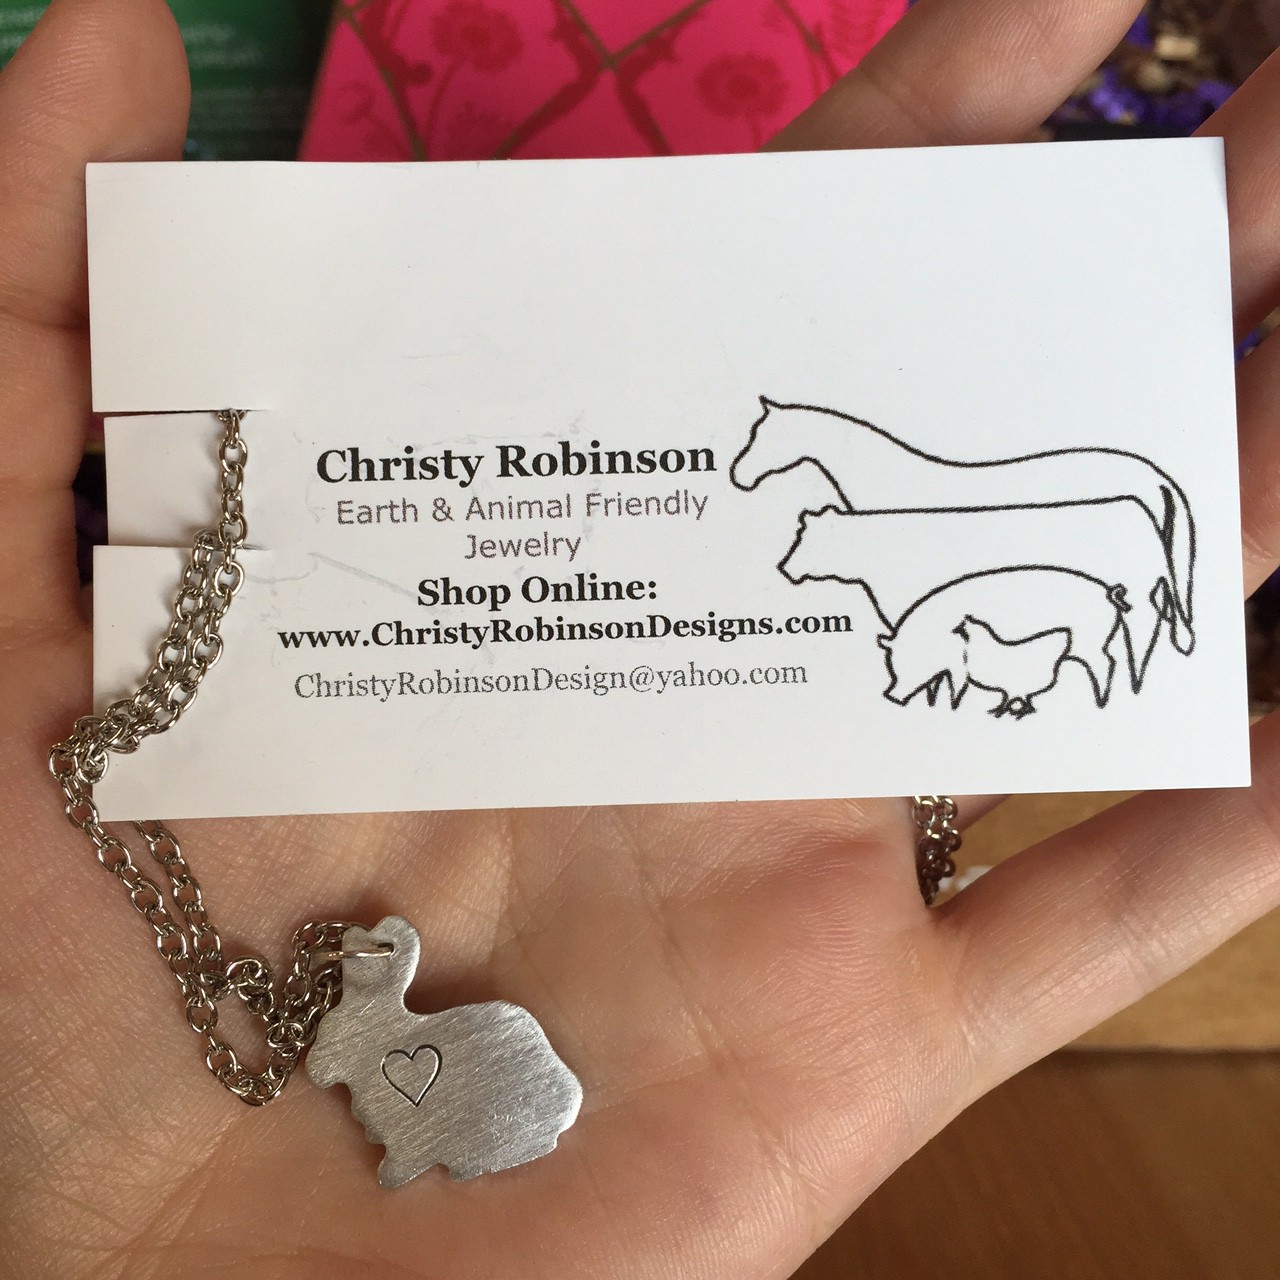 Christy Robinson bunny necklace